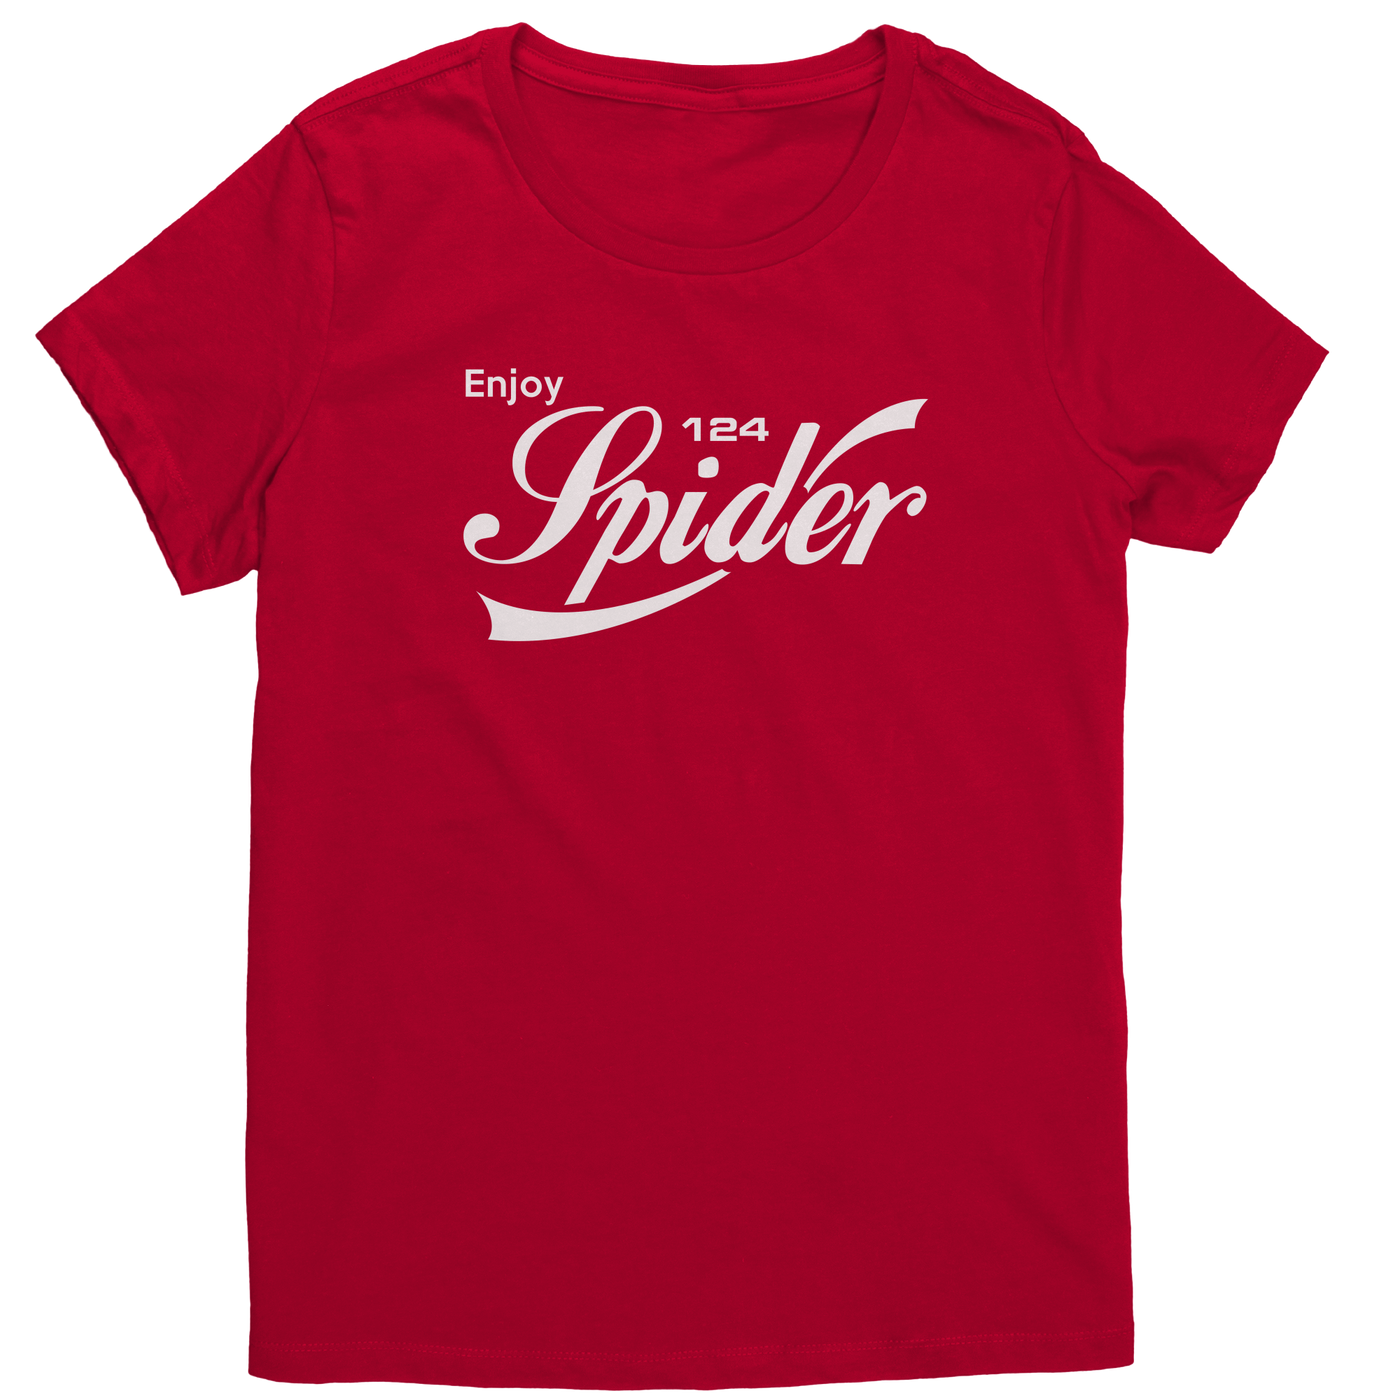 enjoy-124-spider-womens-shirt-red